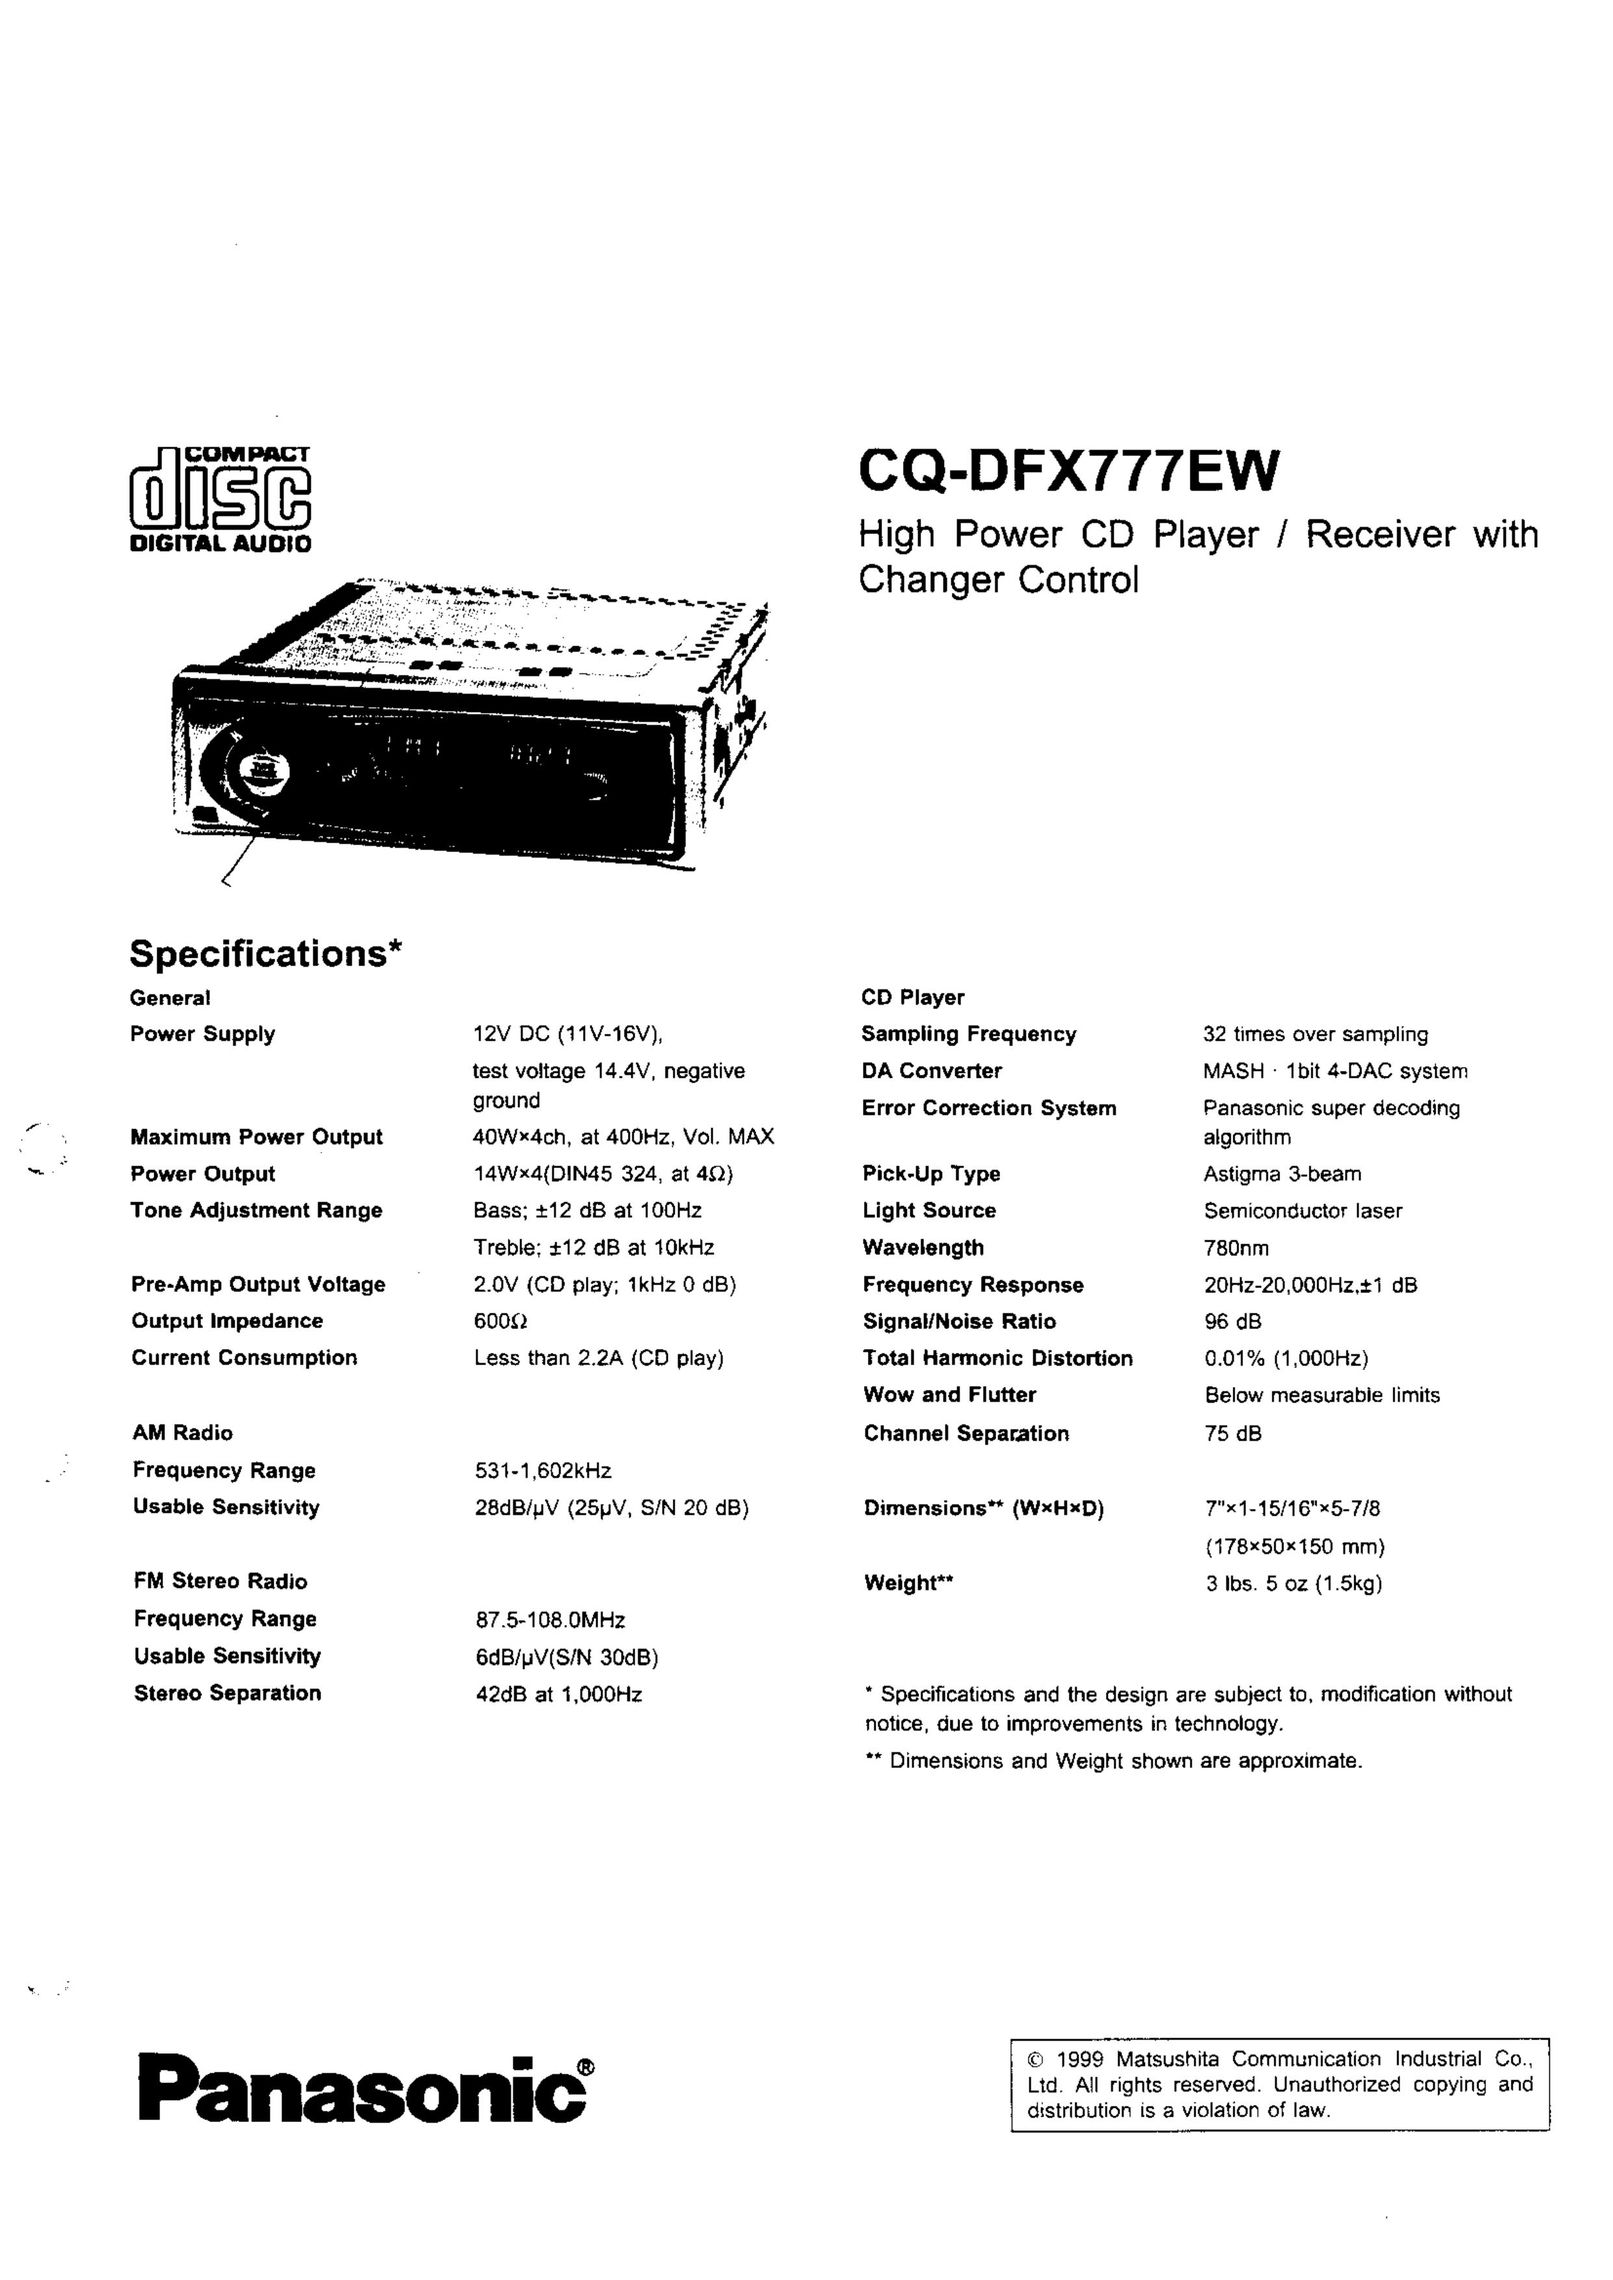 Panasonic CQ-DFX777EW CD Player User Manual